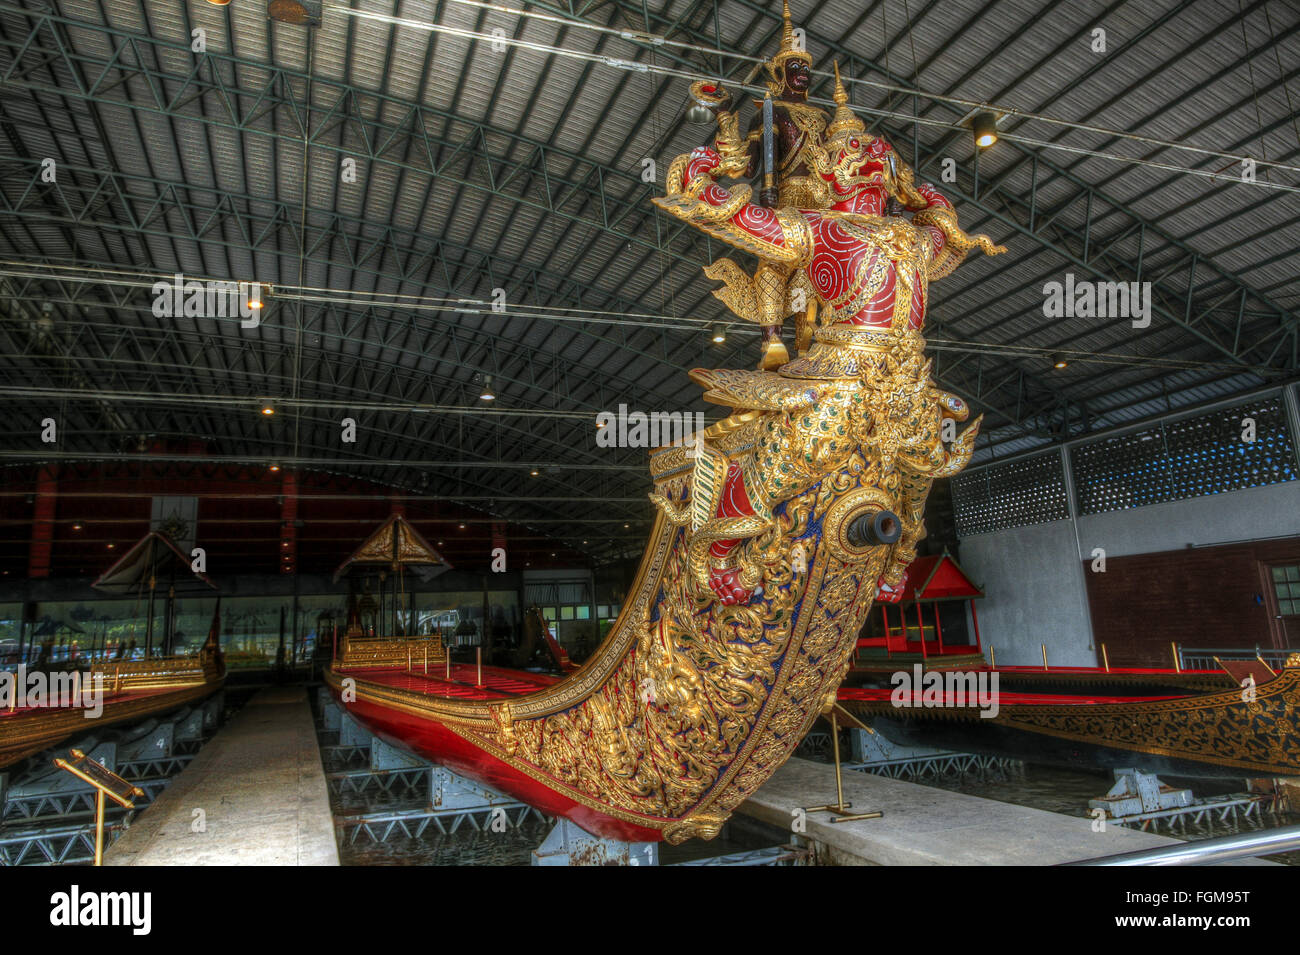 Dragon Boat, royal barge du roi thaïlandais, Musée National des Barges royales, Bangkok, Thaïlande Banque D'Images